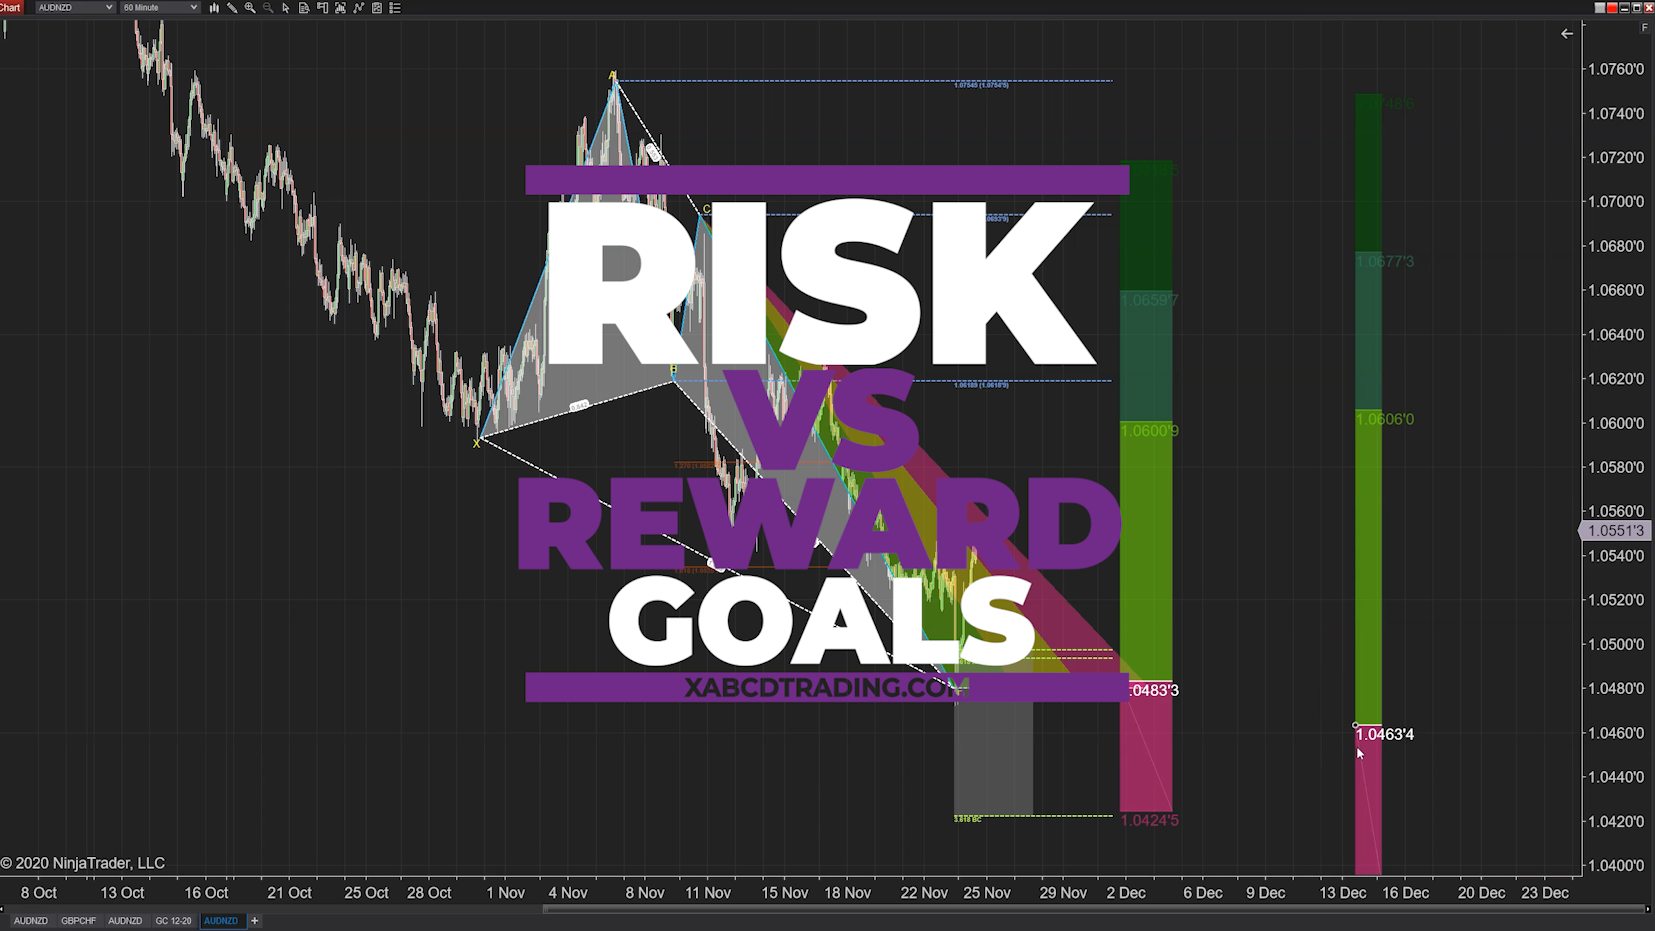 Risk vs Reward goals in xabcd pattern trading